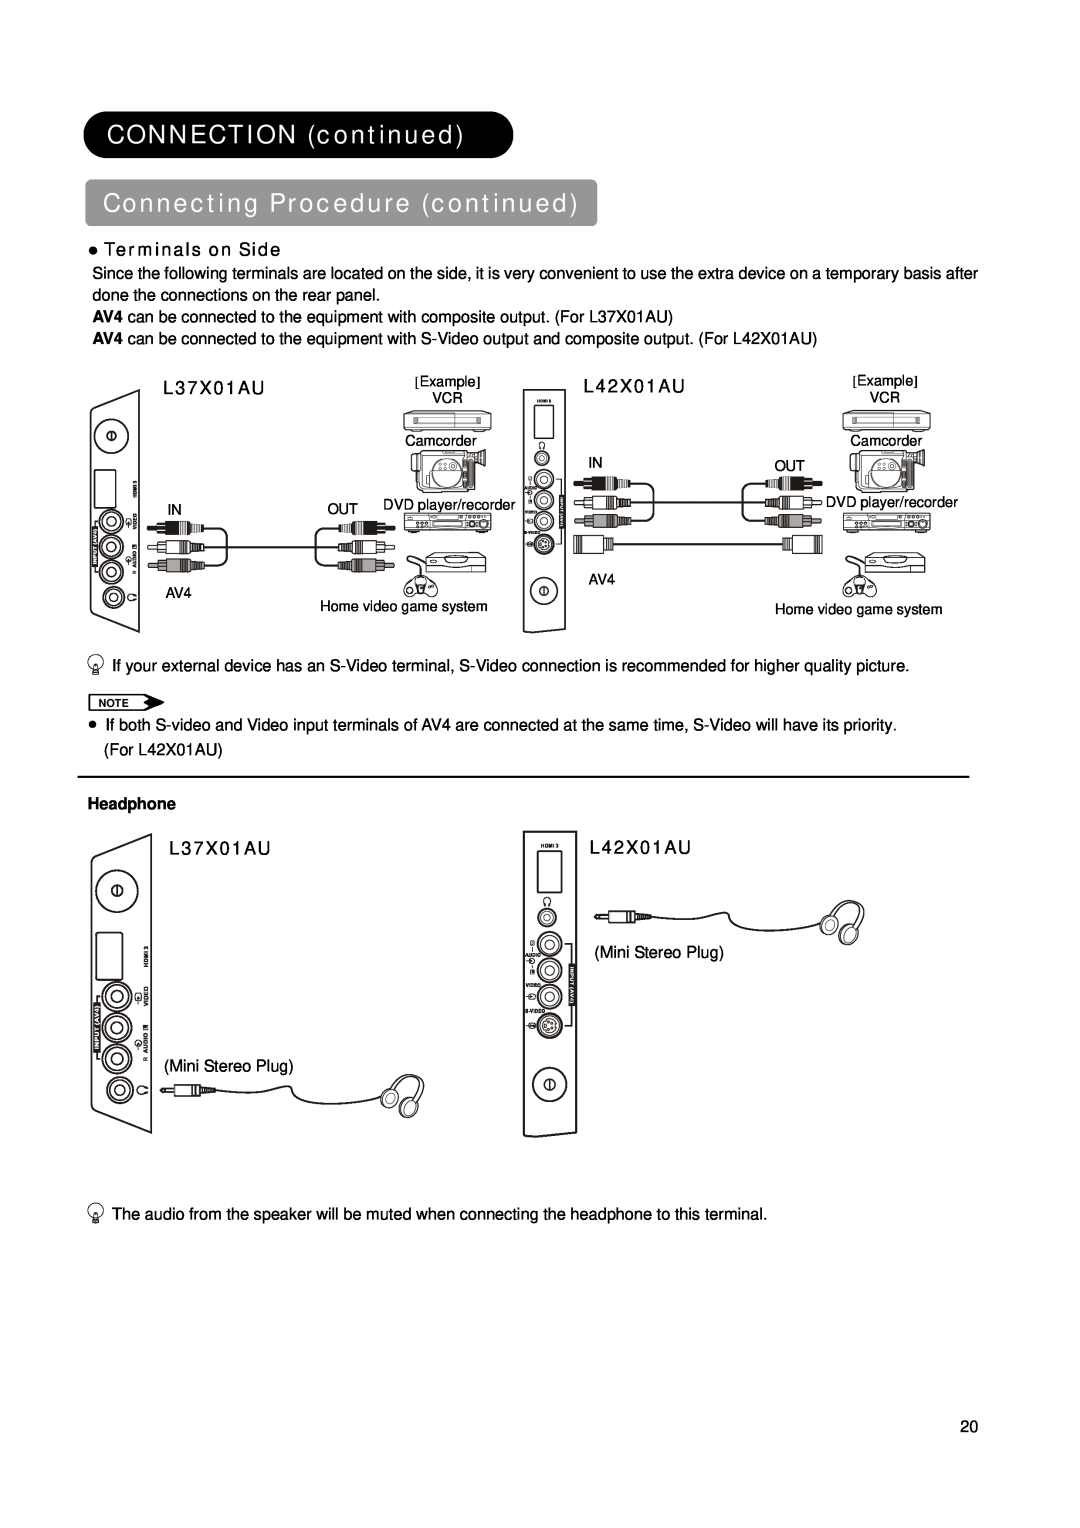 Hitachi L42X01AU manual Ɣ Terminals on Side, CONNECTION continued Connecting Procedure continued, L37X01AU 